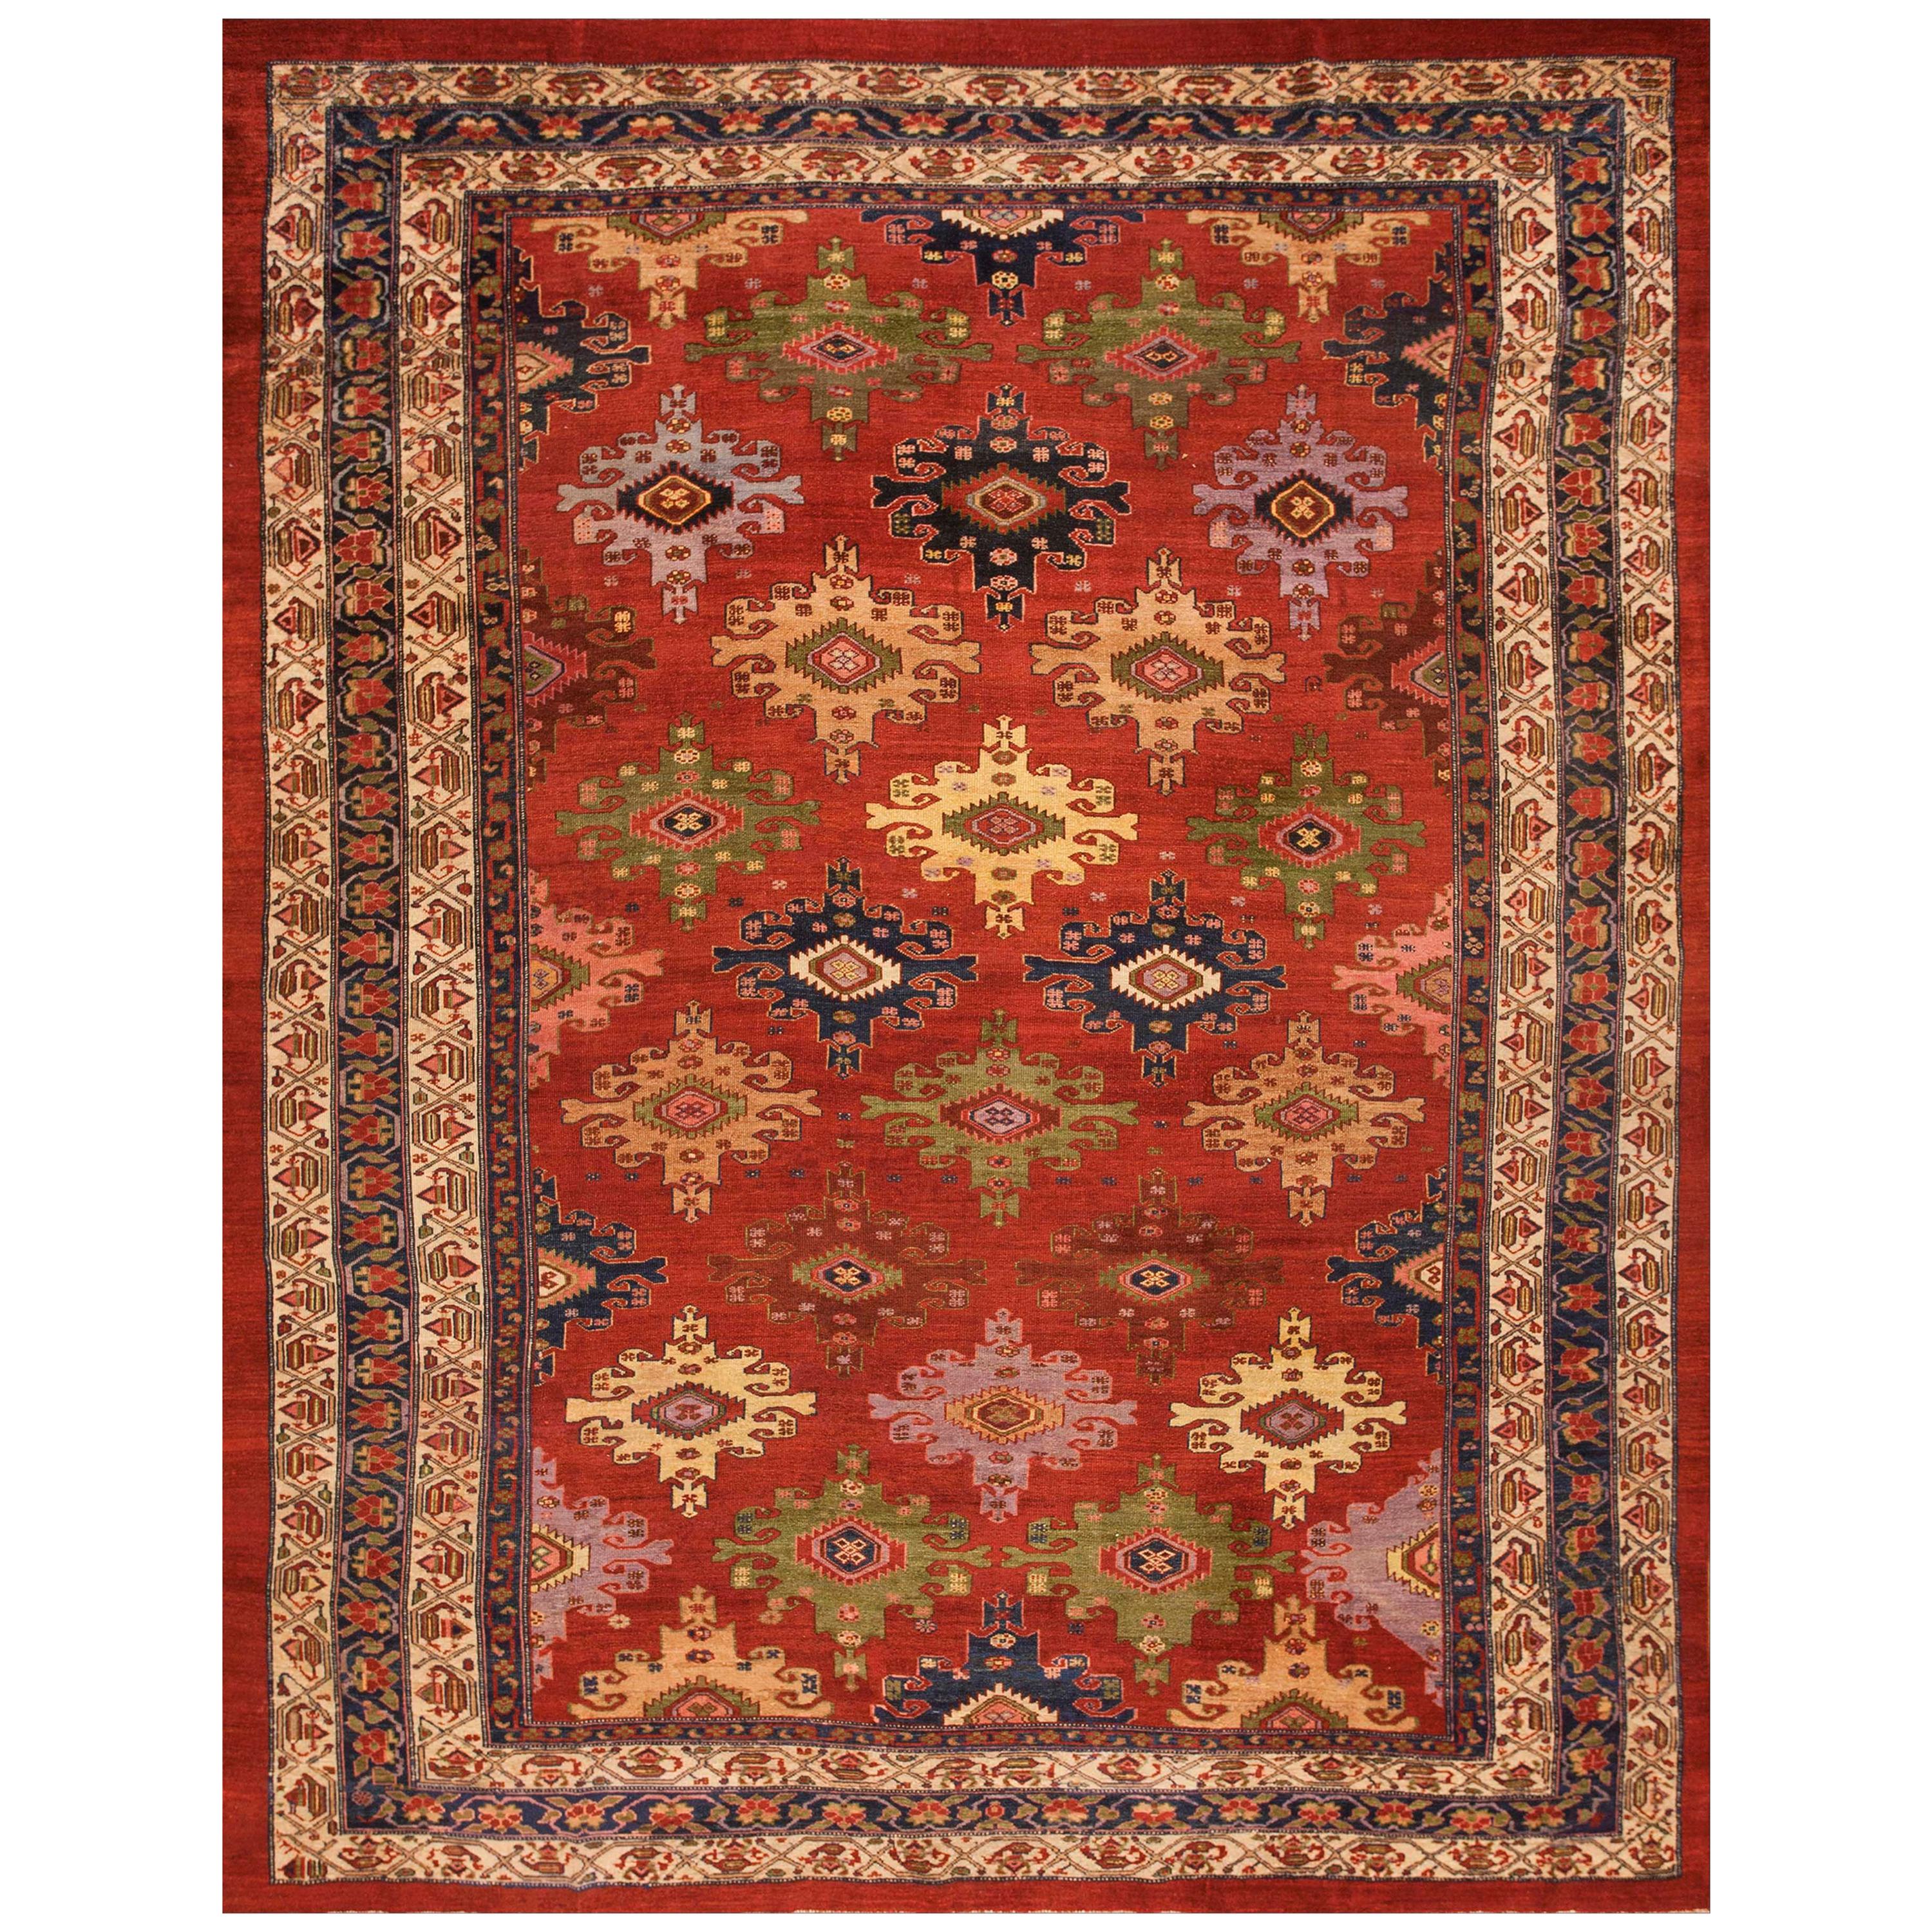 19th Century Persian Malayer Carpet ( 9'4" x 12'4" - 285 x 375 )